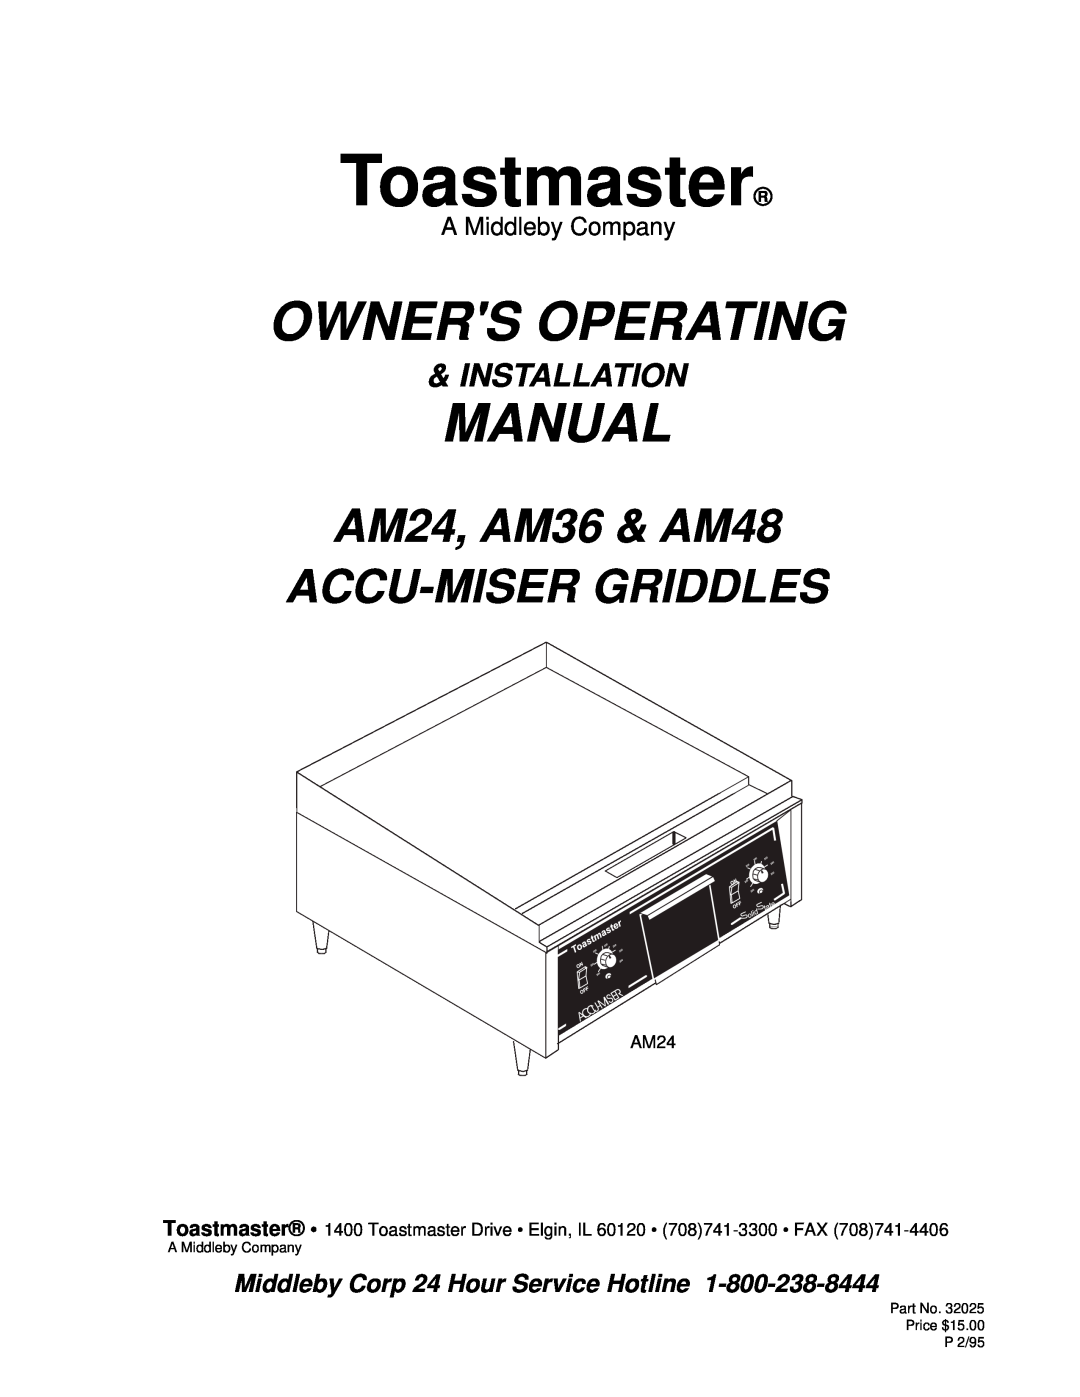 Toastmaster AM24, AM36, AM48 installation manual Toastmaster, Owners Operating, Manual, Installation, A Middleby Company 